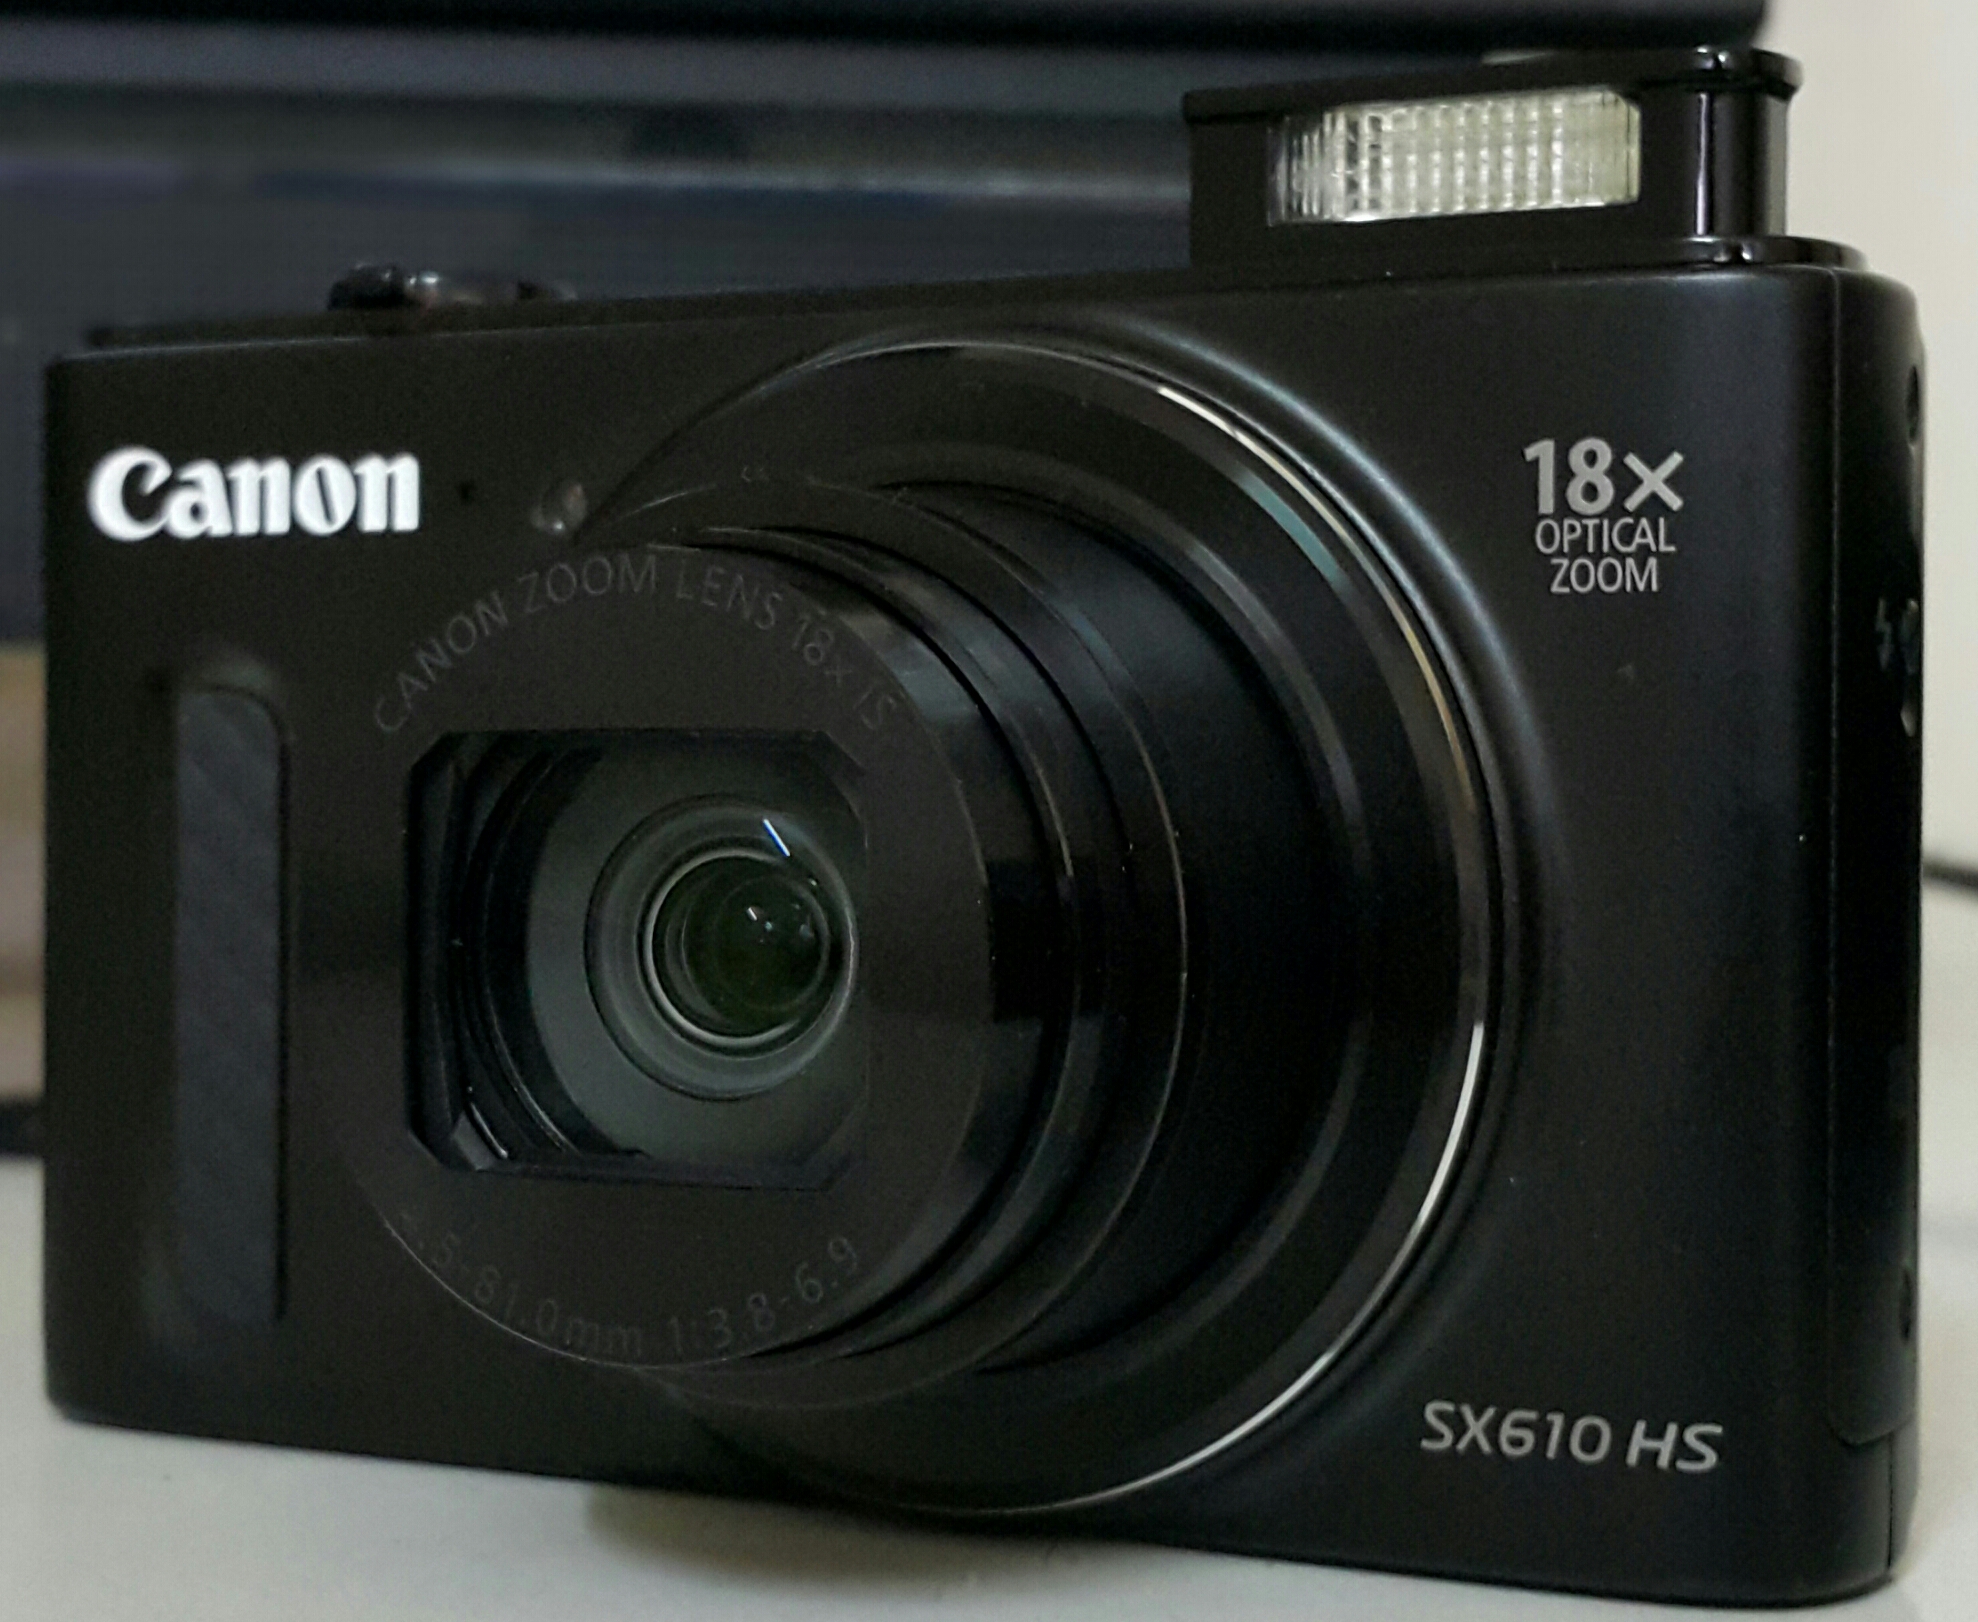 File:Canon PowerShot SX610 HS Black Version.jpg - Wikimedia Commons